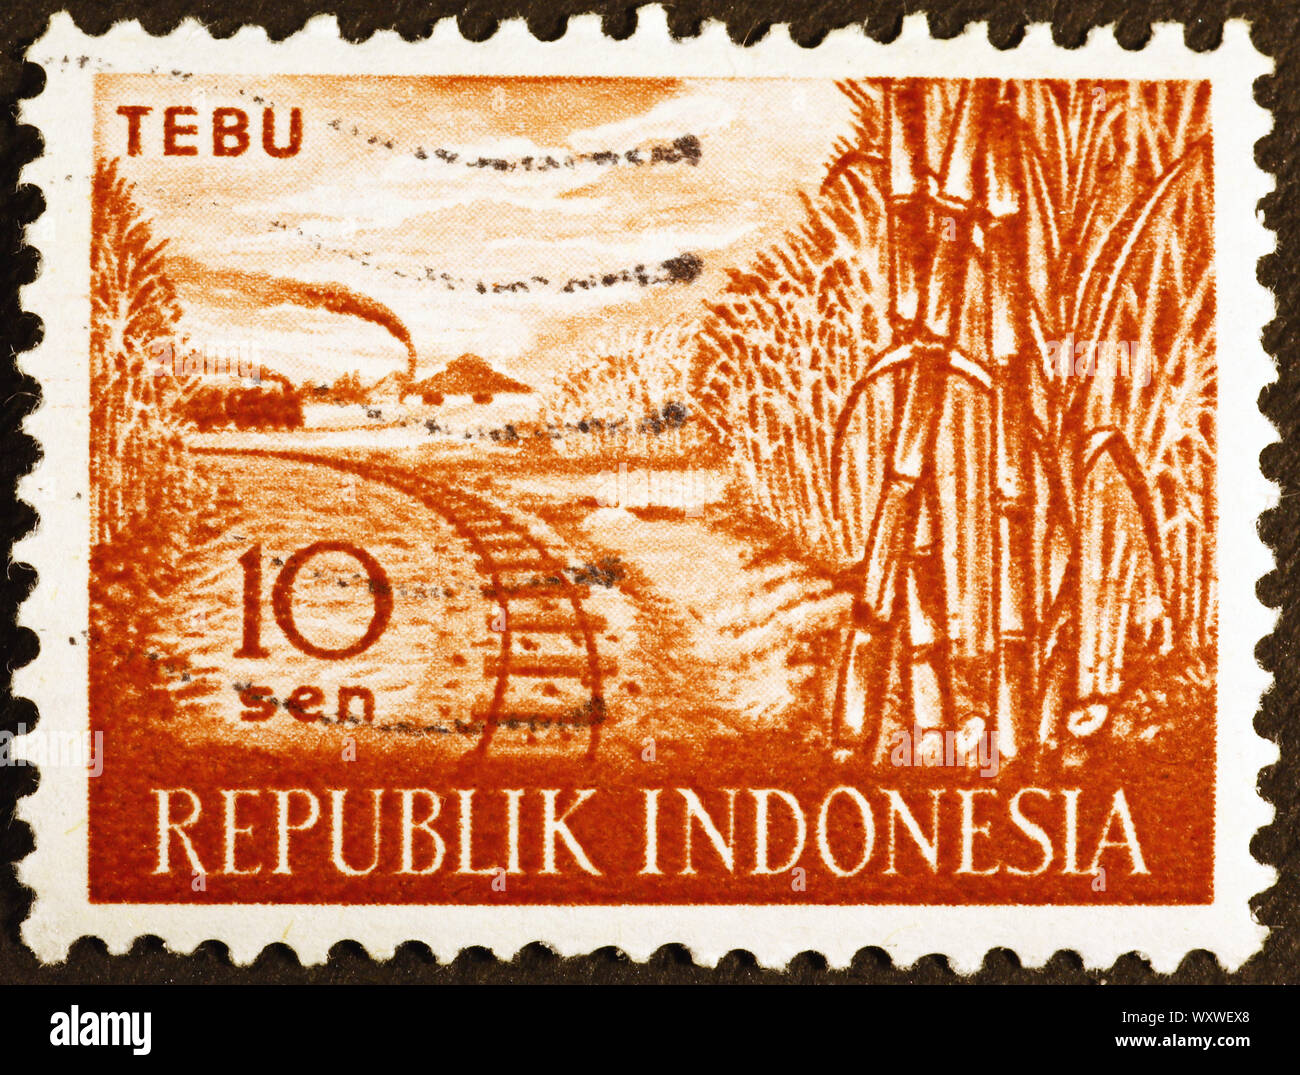 Sugar plantations on indonesian postage stamp Stock Photo